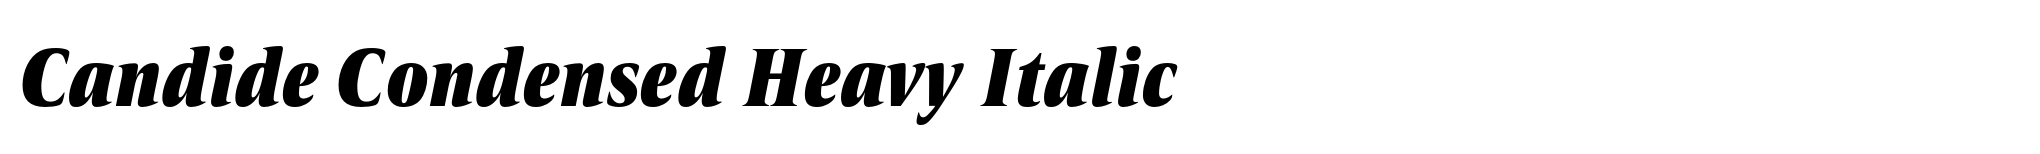 Candide Condensed Heavy Italic image